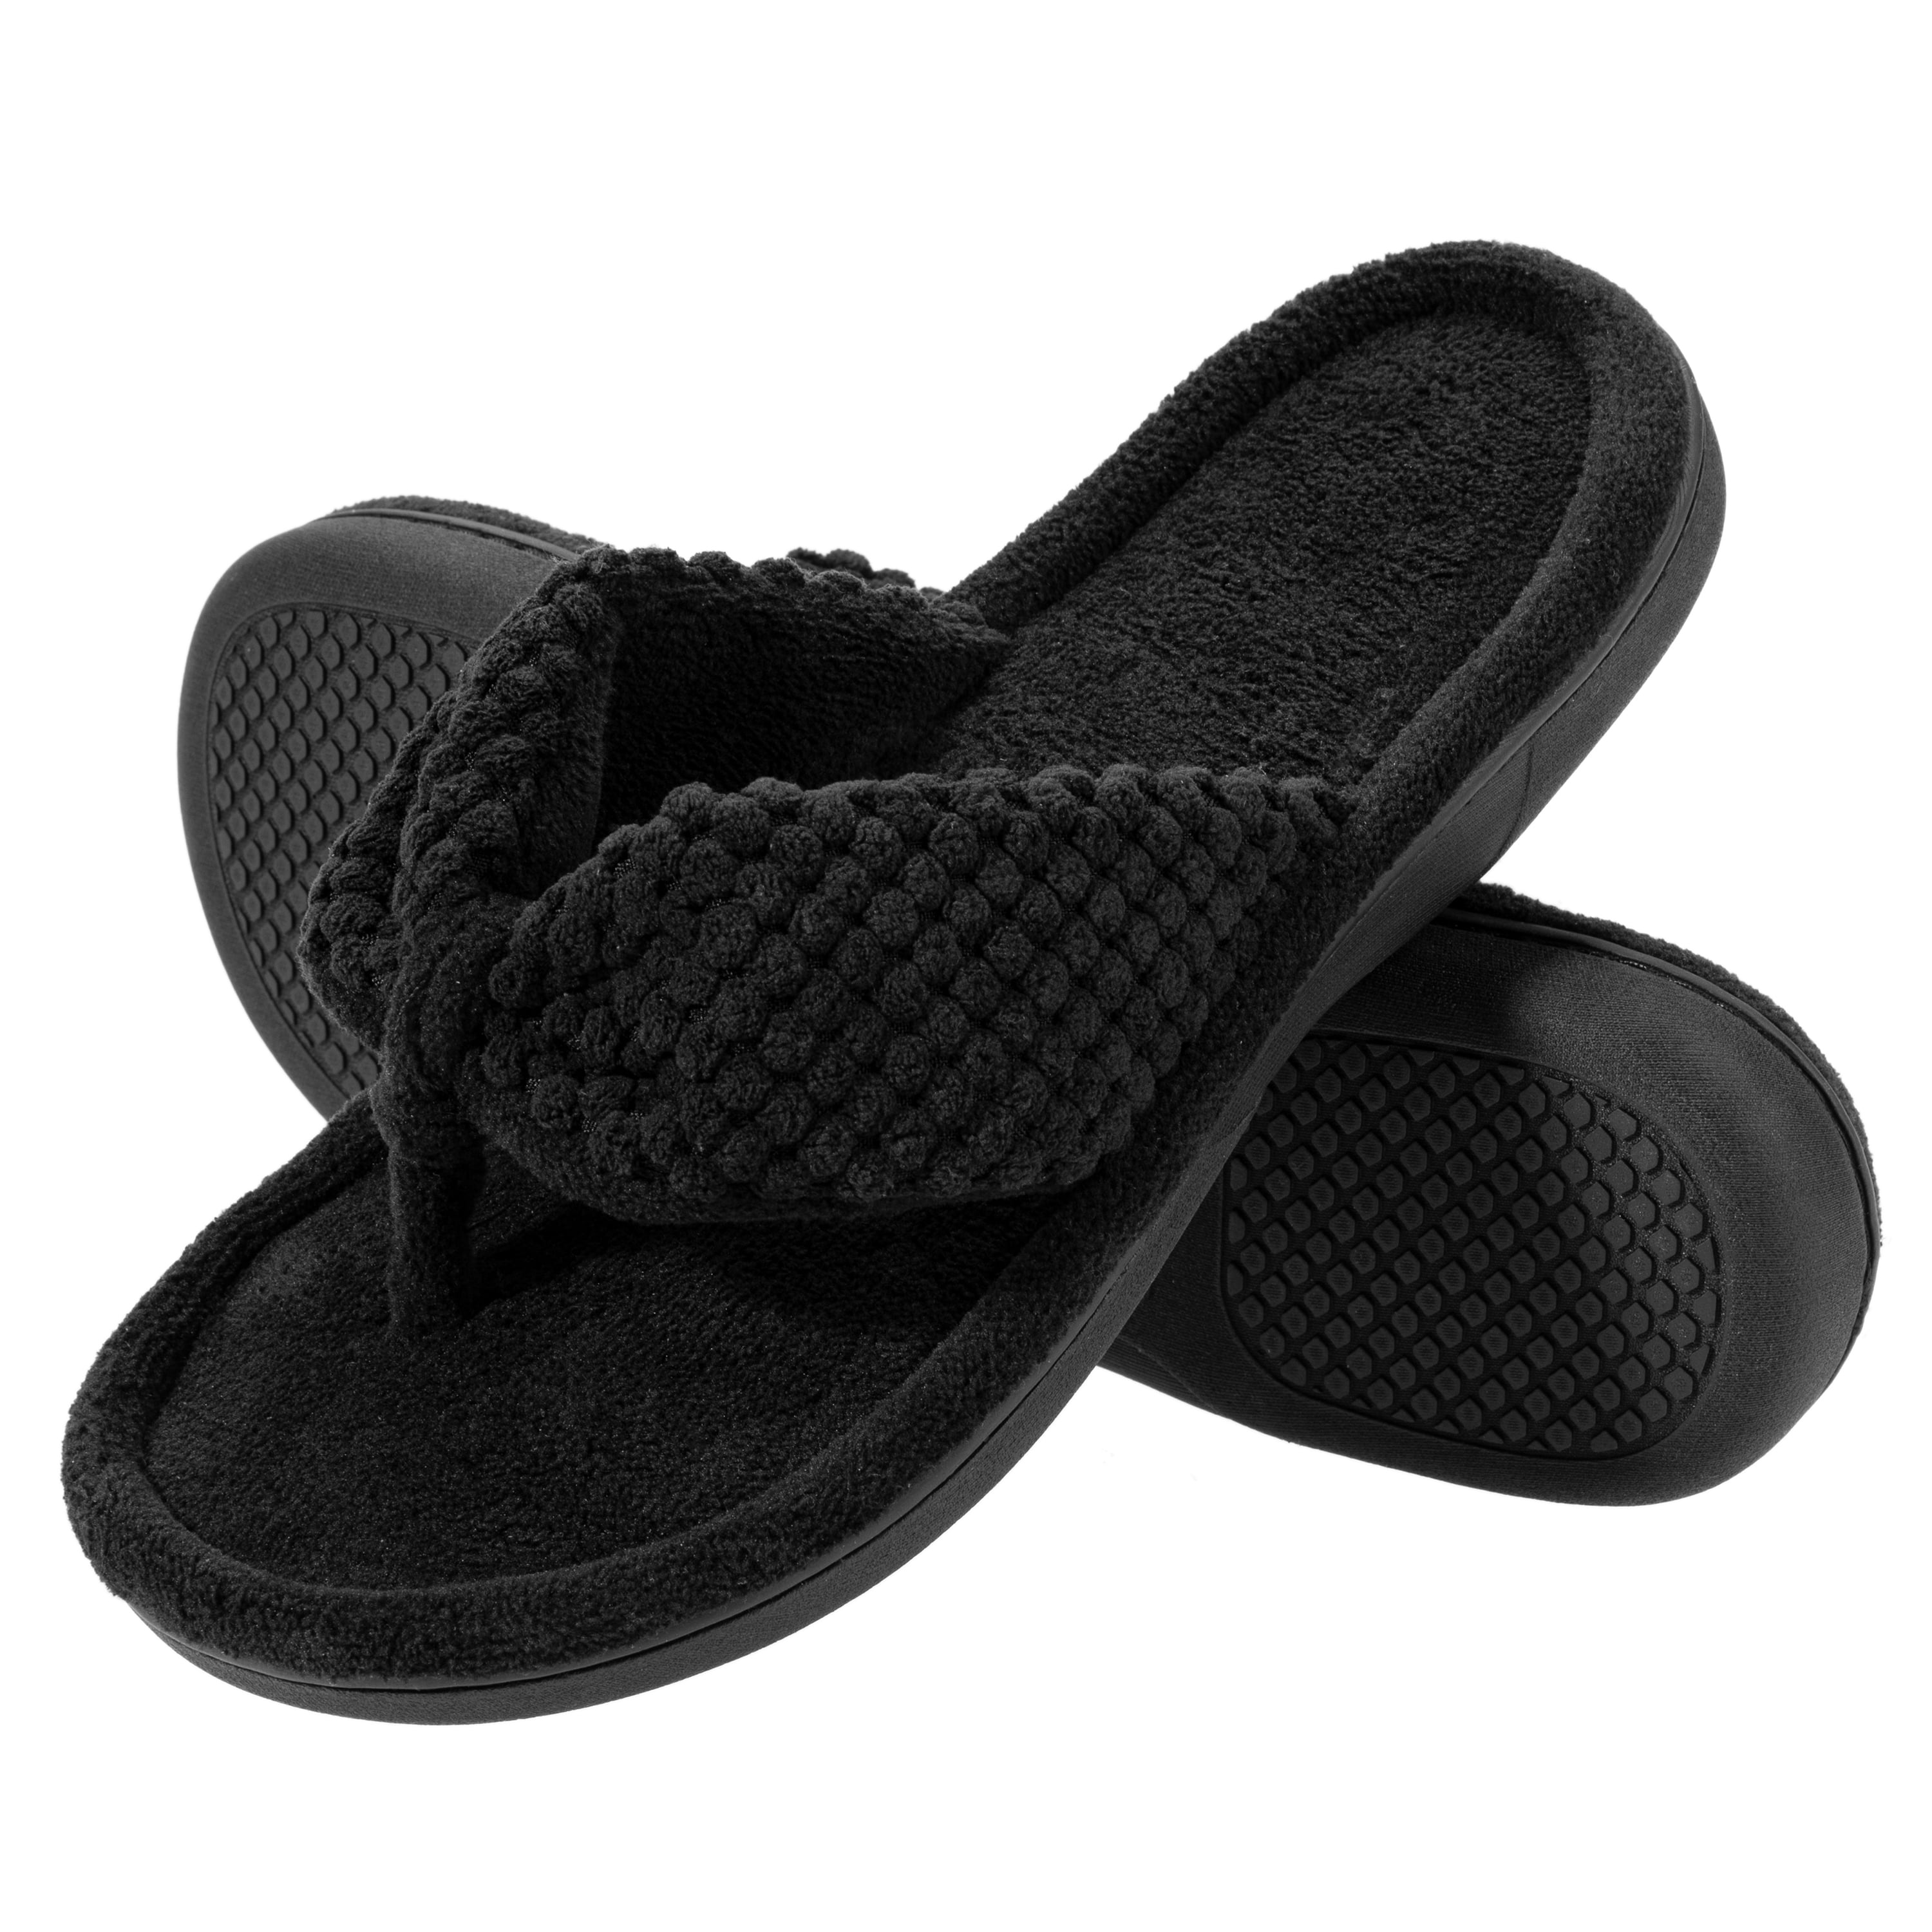  Siggodi Womens Slippers Open Toe,Comfy Memory Foam Slippers  for Women,Summer Ladies' Slip on House Bedroom Slide Slippers Black Grey  Pink Navy